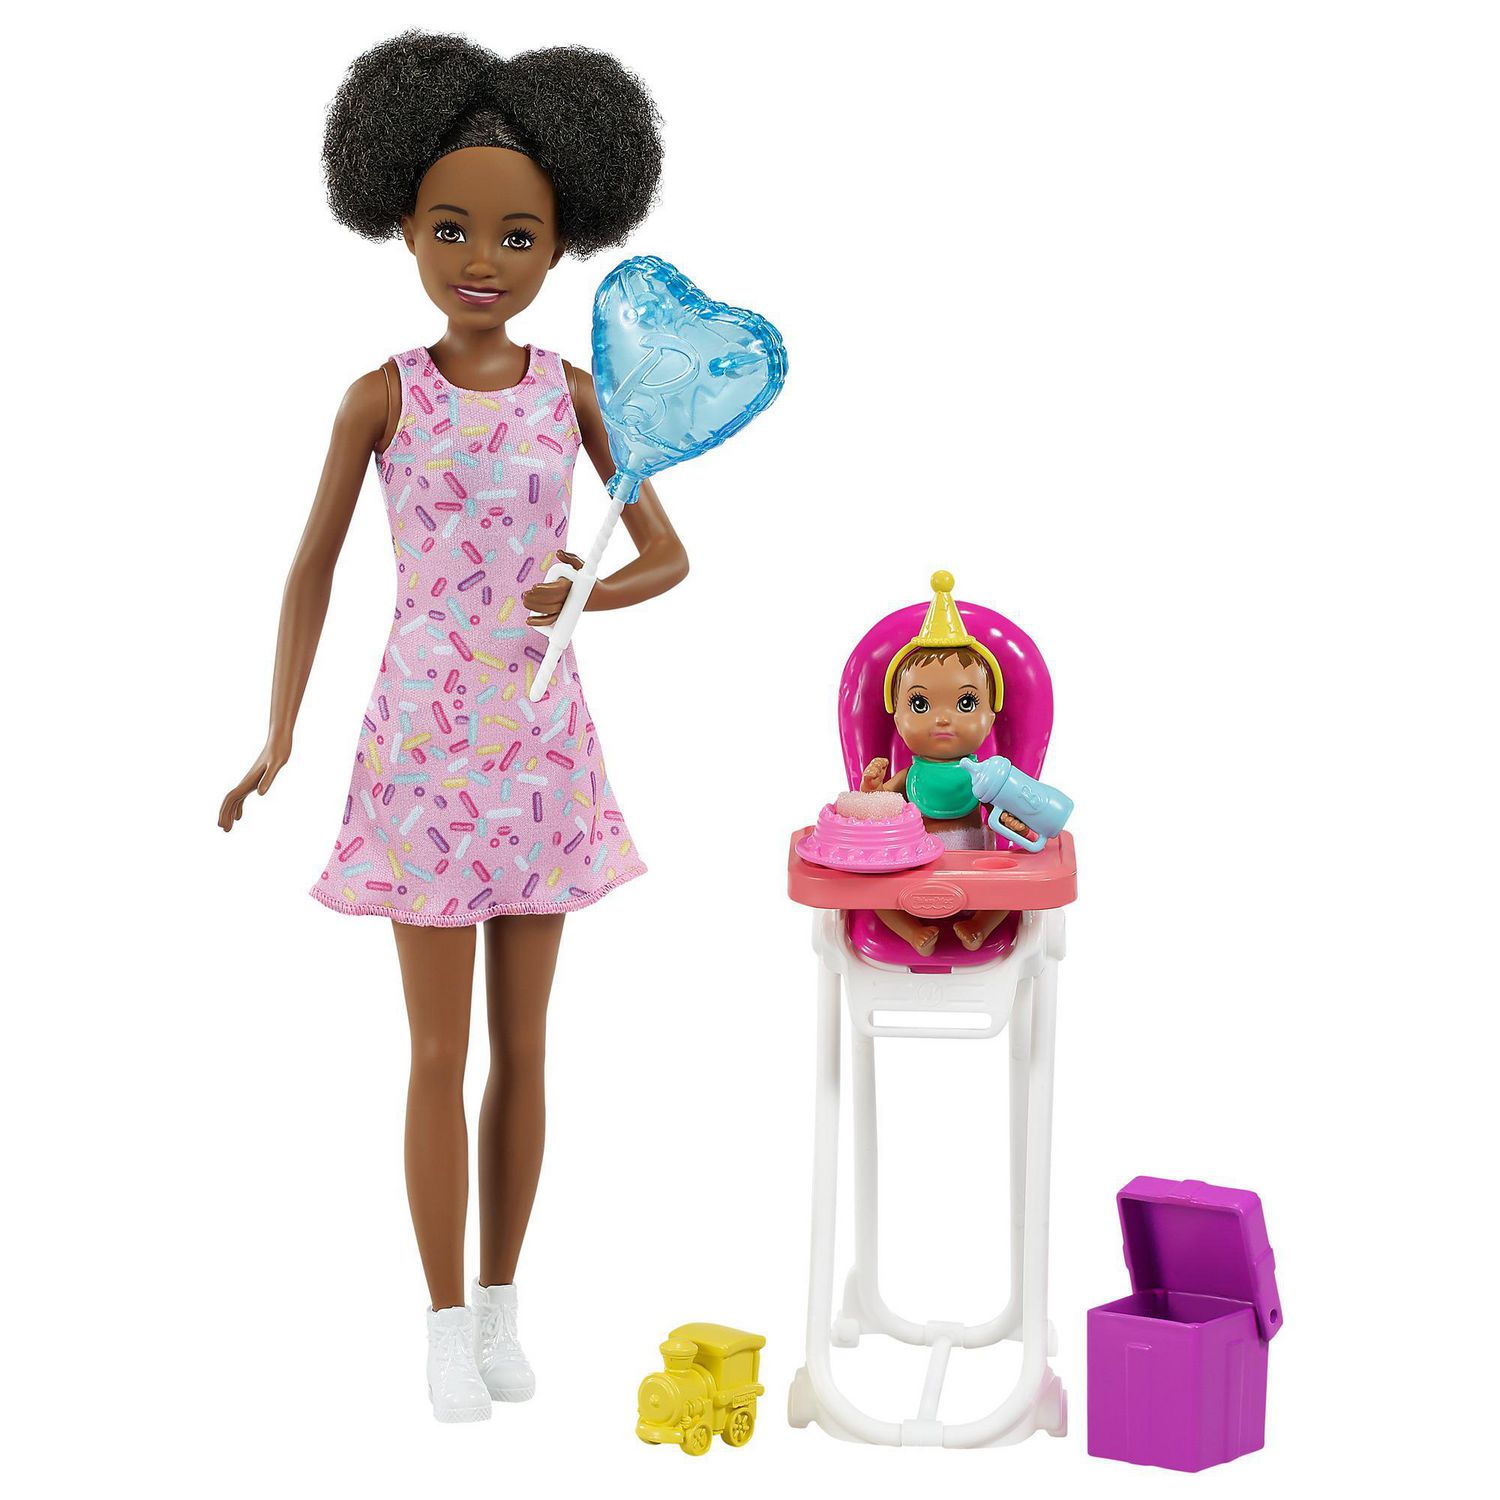 Barbie Skipper Babysitters Inc. Dolls & Playset with Babysitting